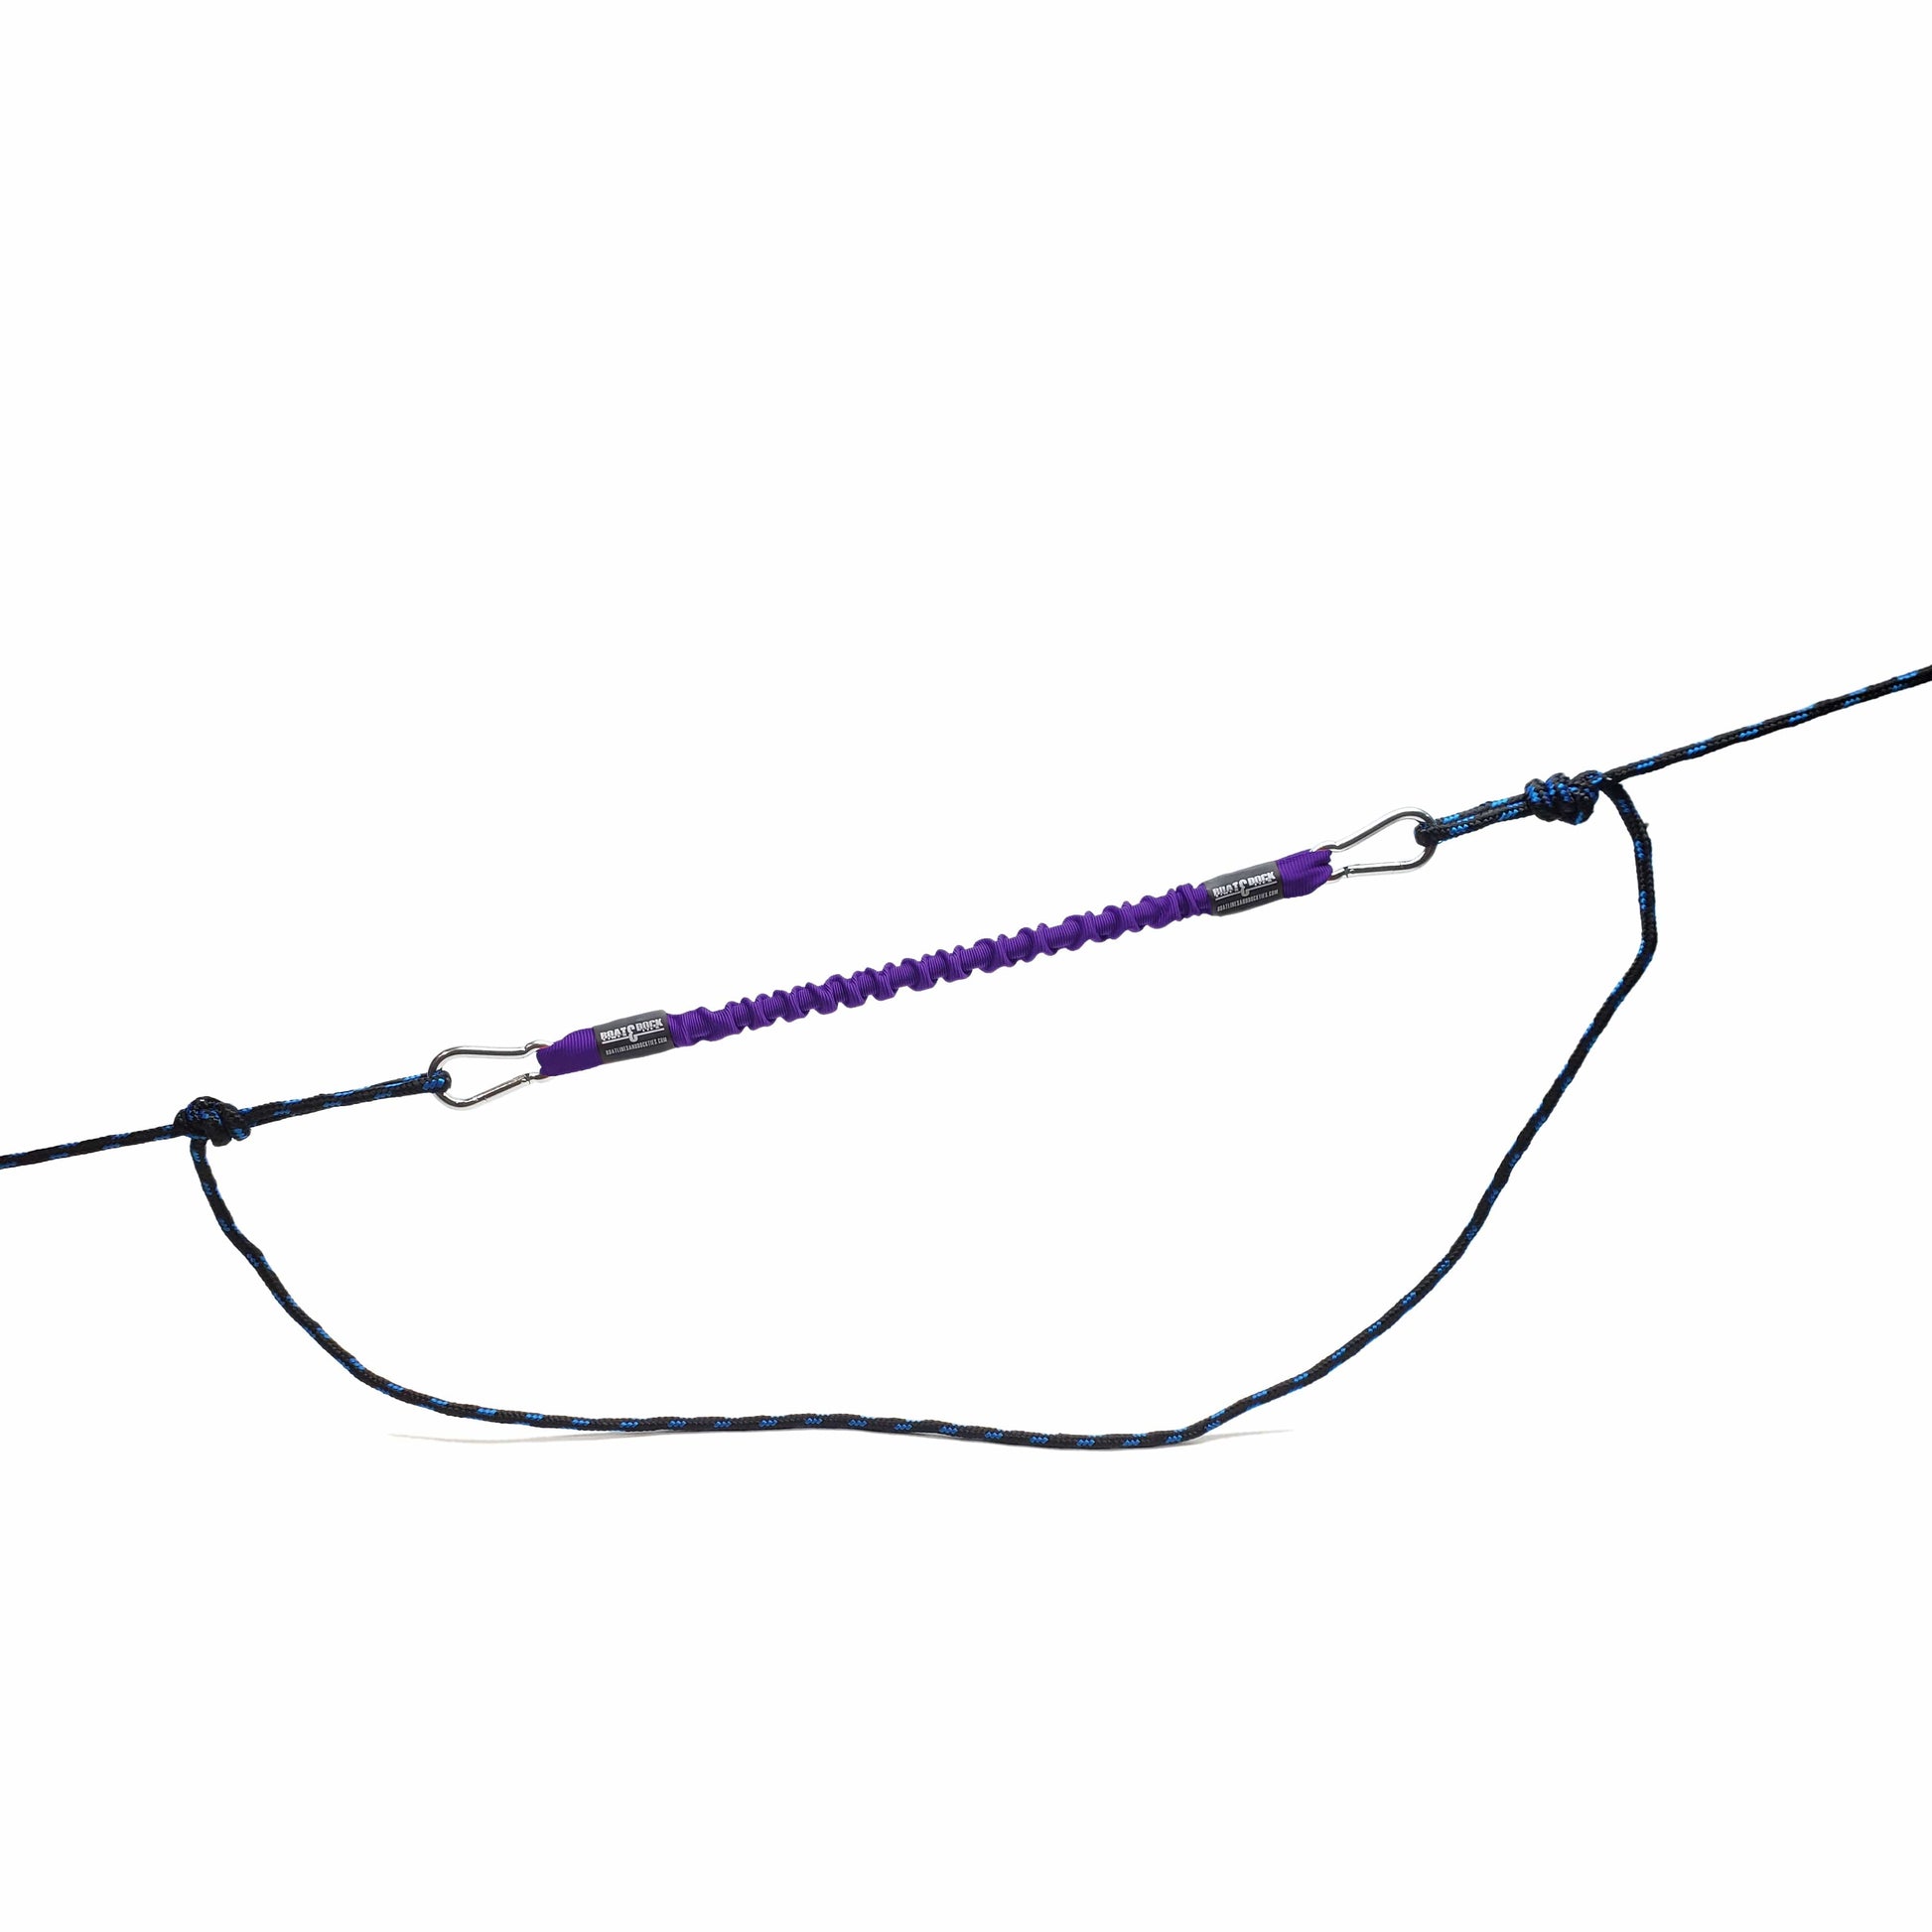 Bungee Snubber Dock Tie Line - With Stainless Steel Hooks - 1 per pack - Boat Lines & Dock Ties Boat Lines & Dock Ties 24inch / Purple